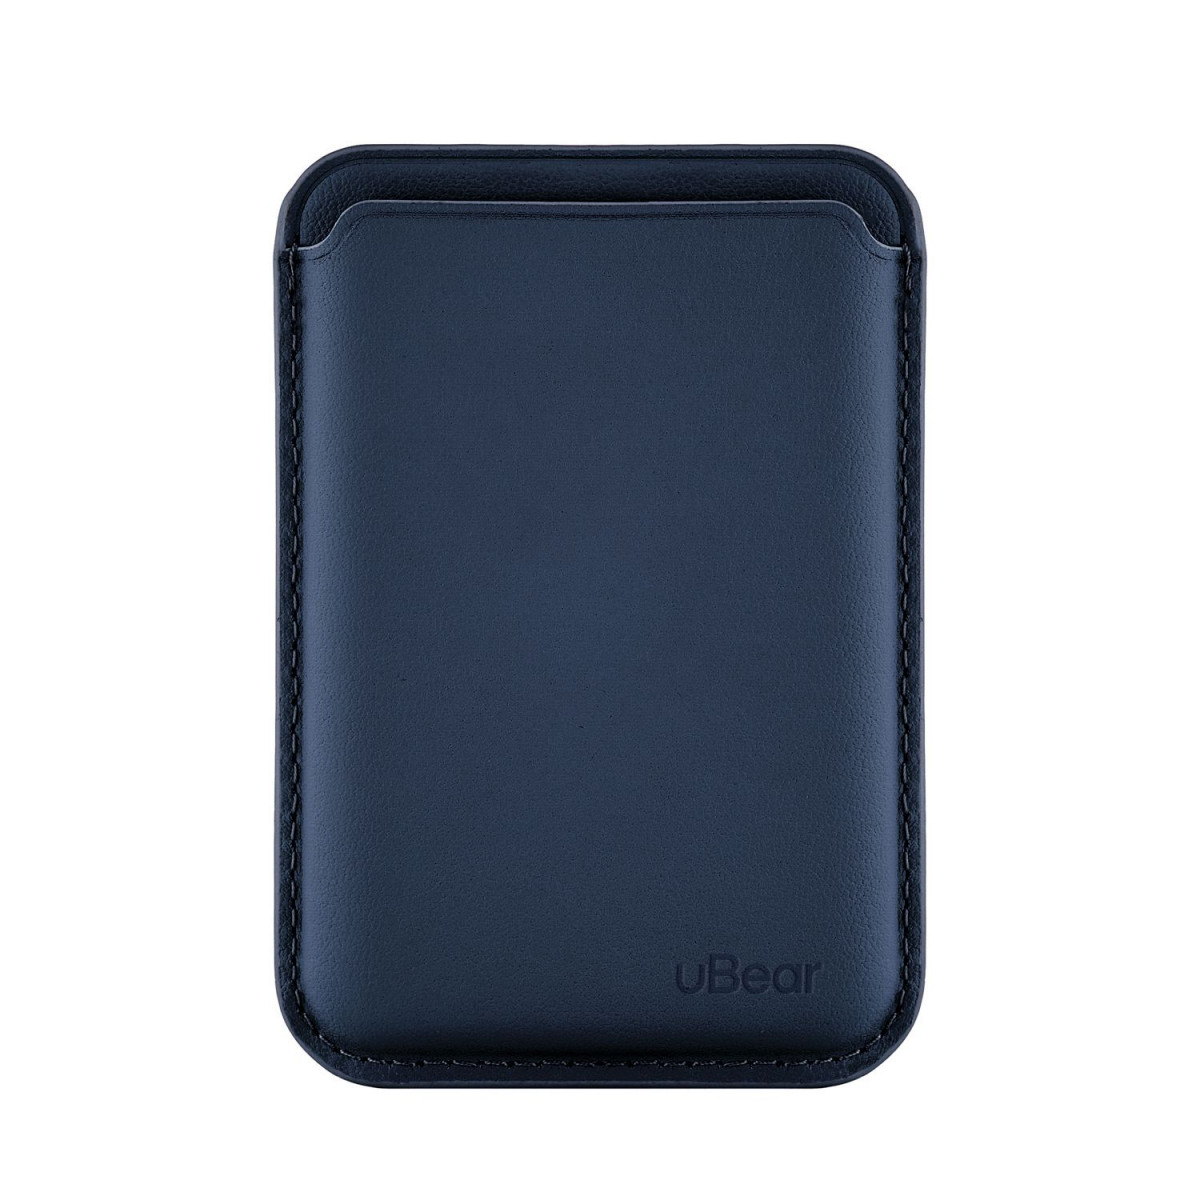 Чехол-бумажник uBear Leather Shell  Темно-синий  